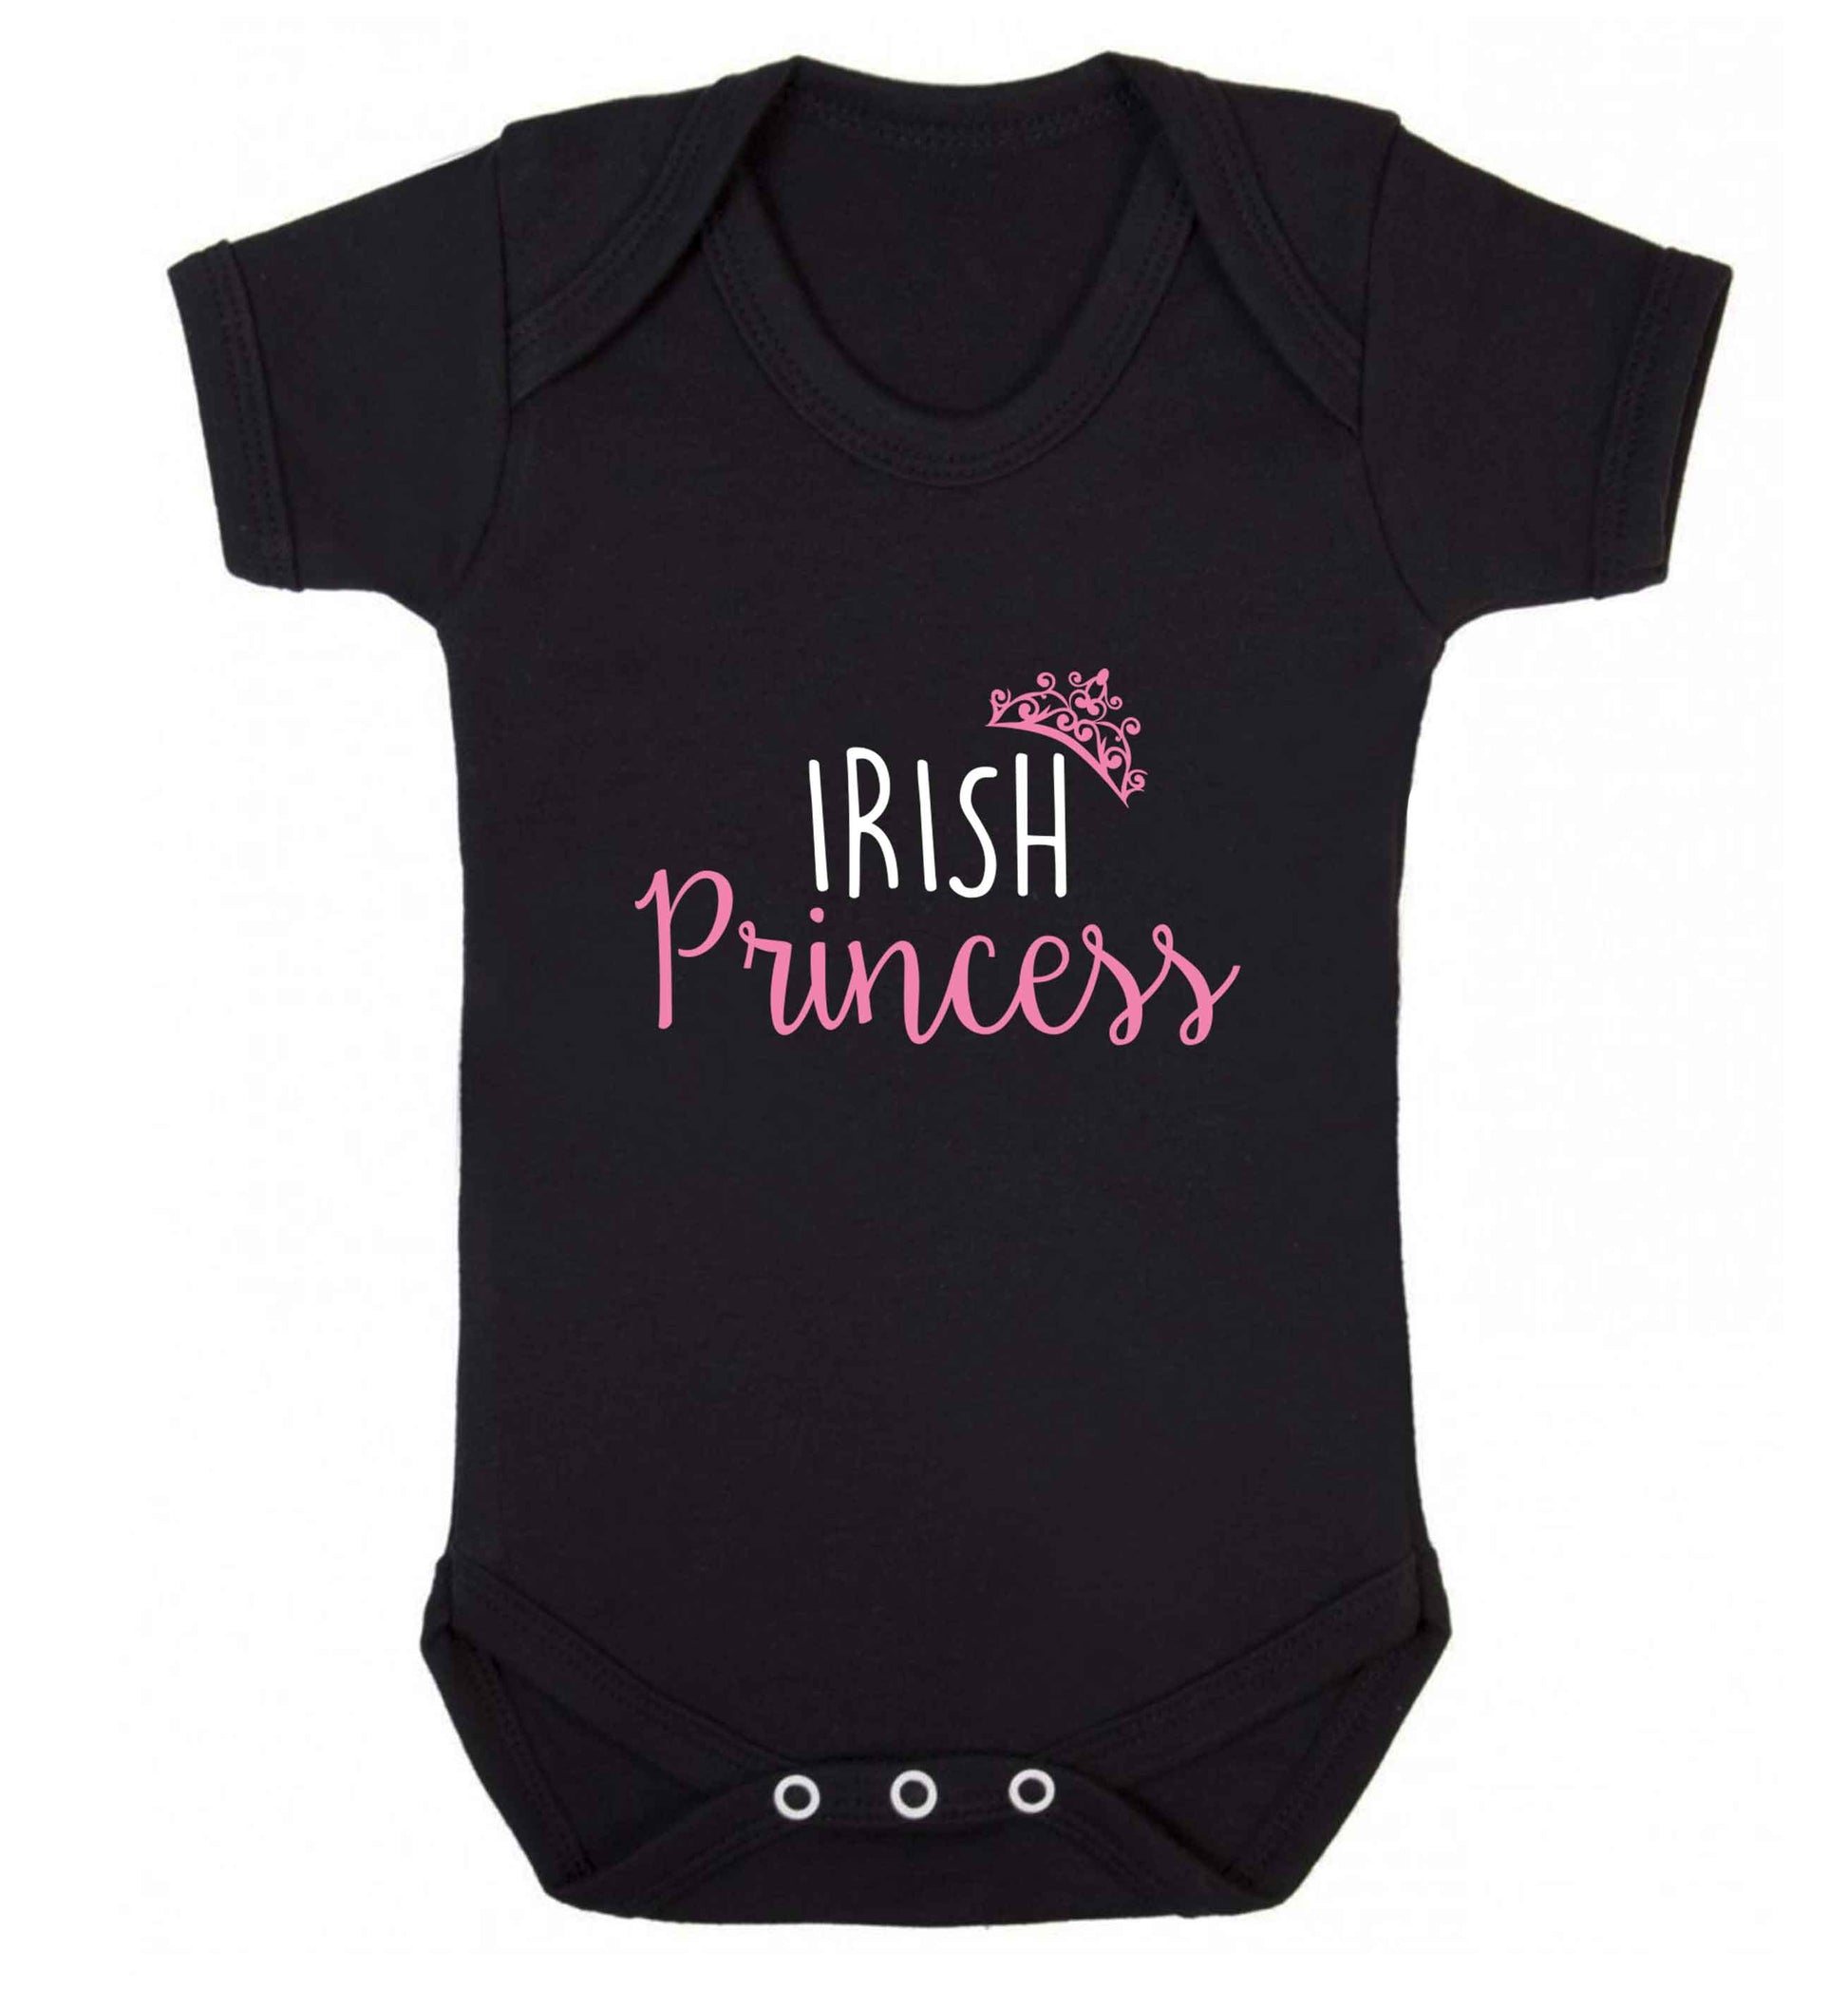 Irish princess baby vest black 18-24 months